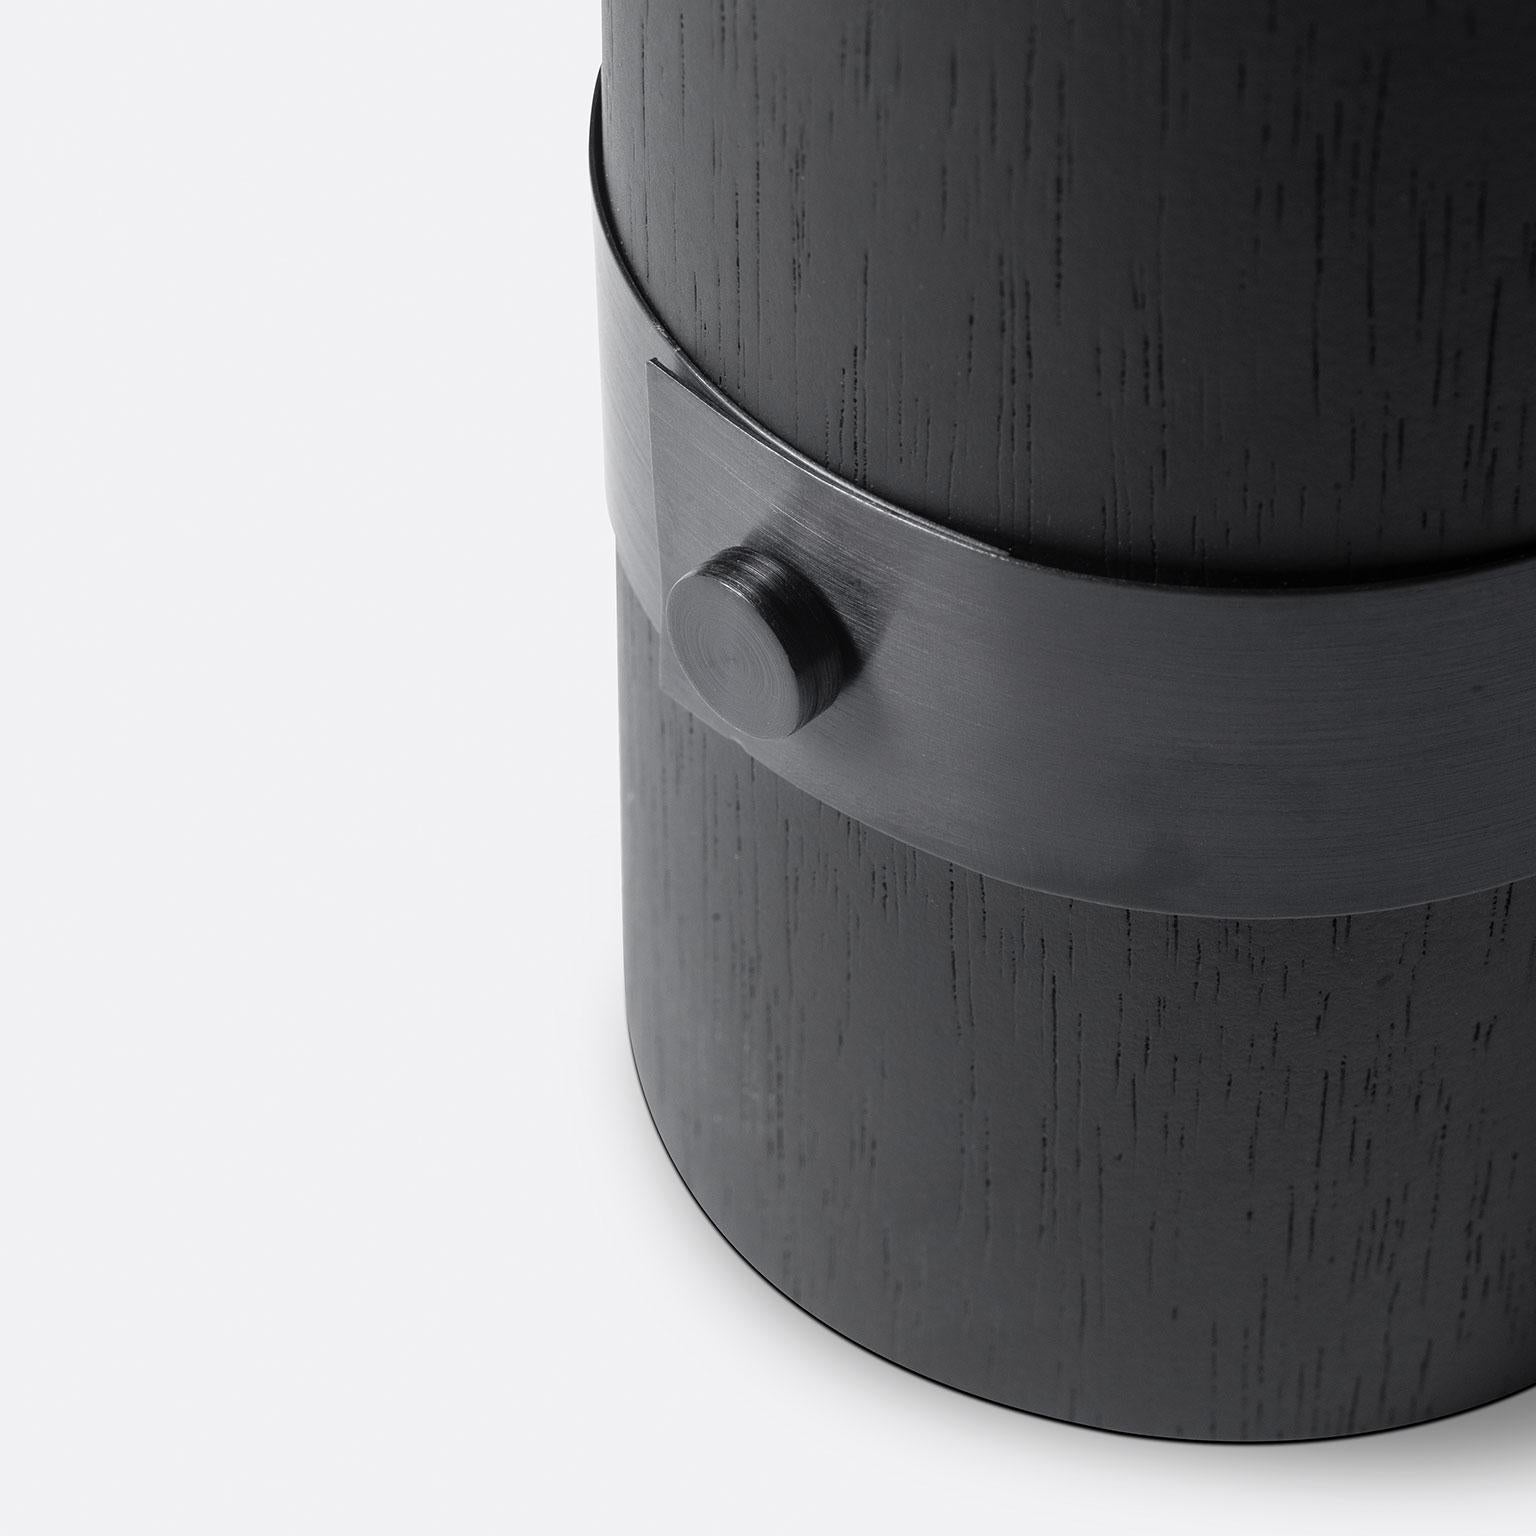 Ebonized Post-Tropical Vase in Black by Wentz, Brazilian Contemporary Design For Sale